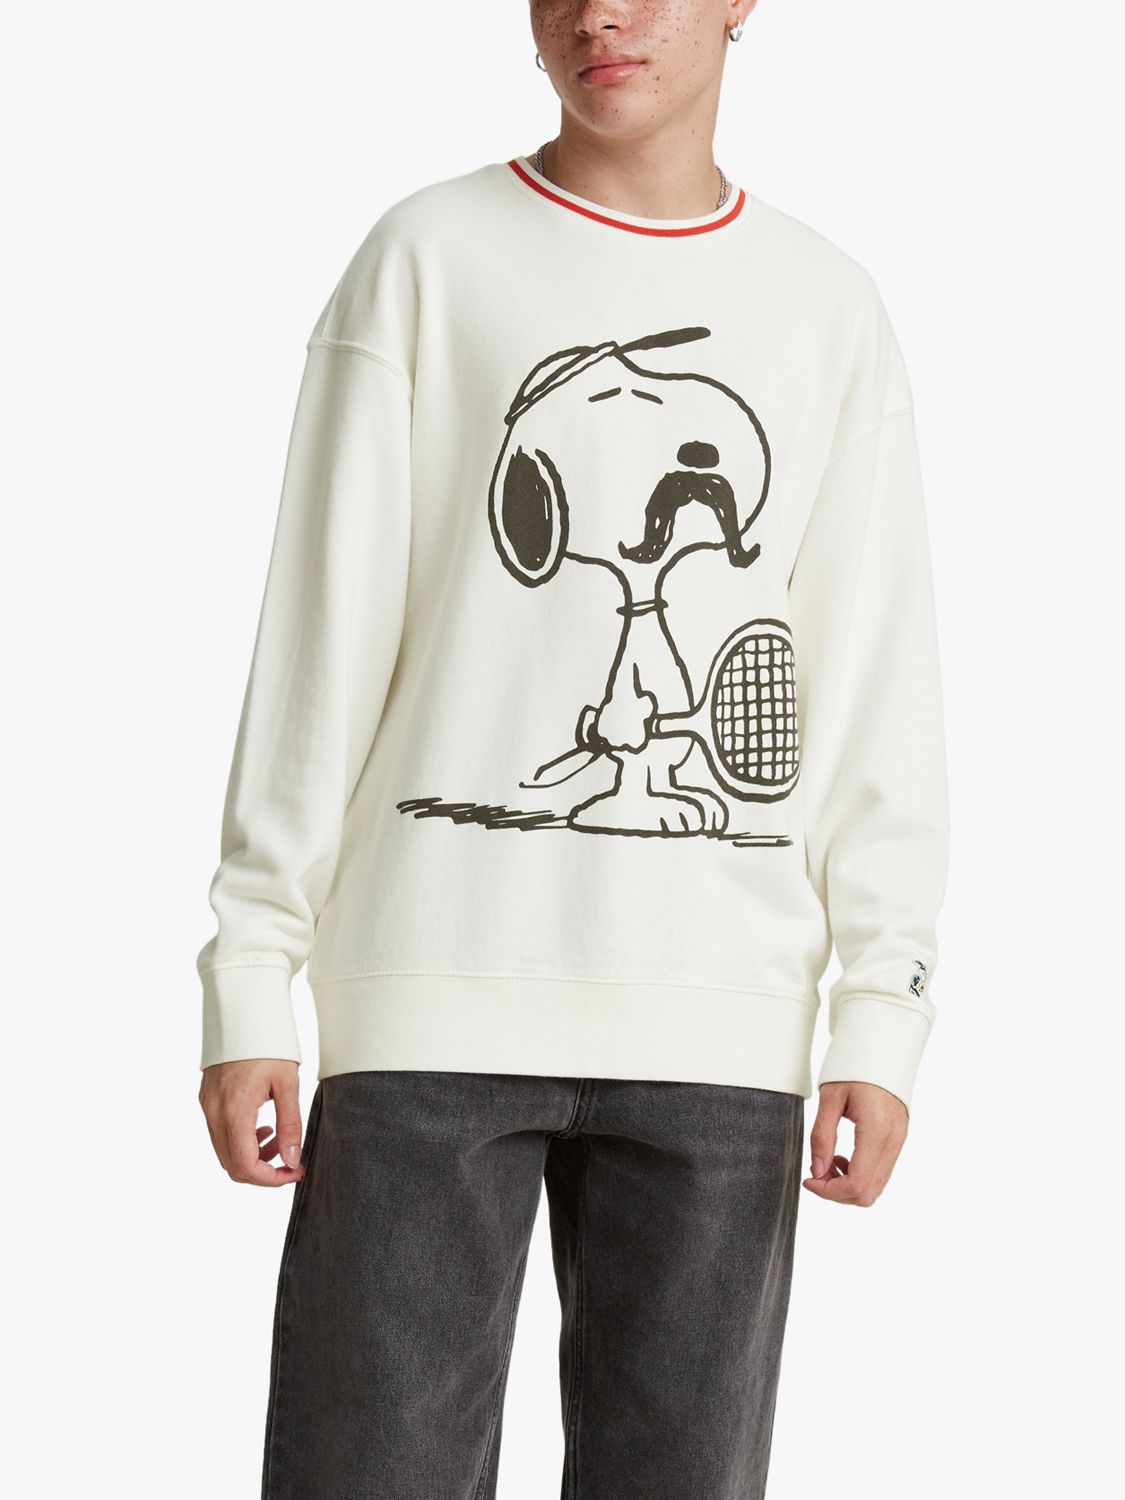 Levi's Peanuts Crew Neck Tennis Snoopy Sweatshirt, White/Multi